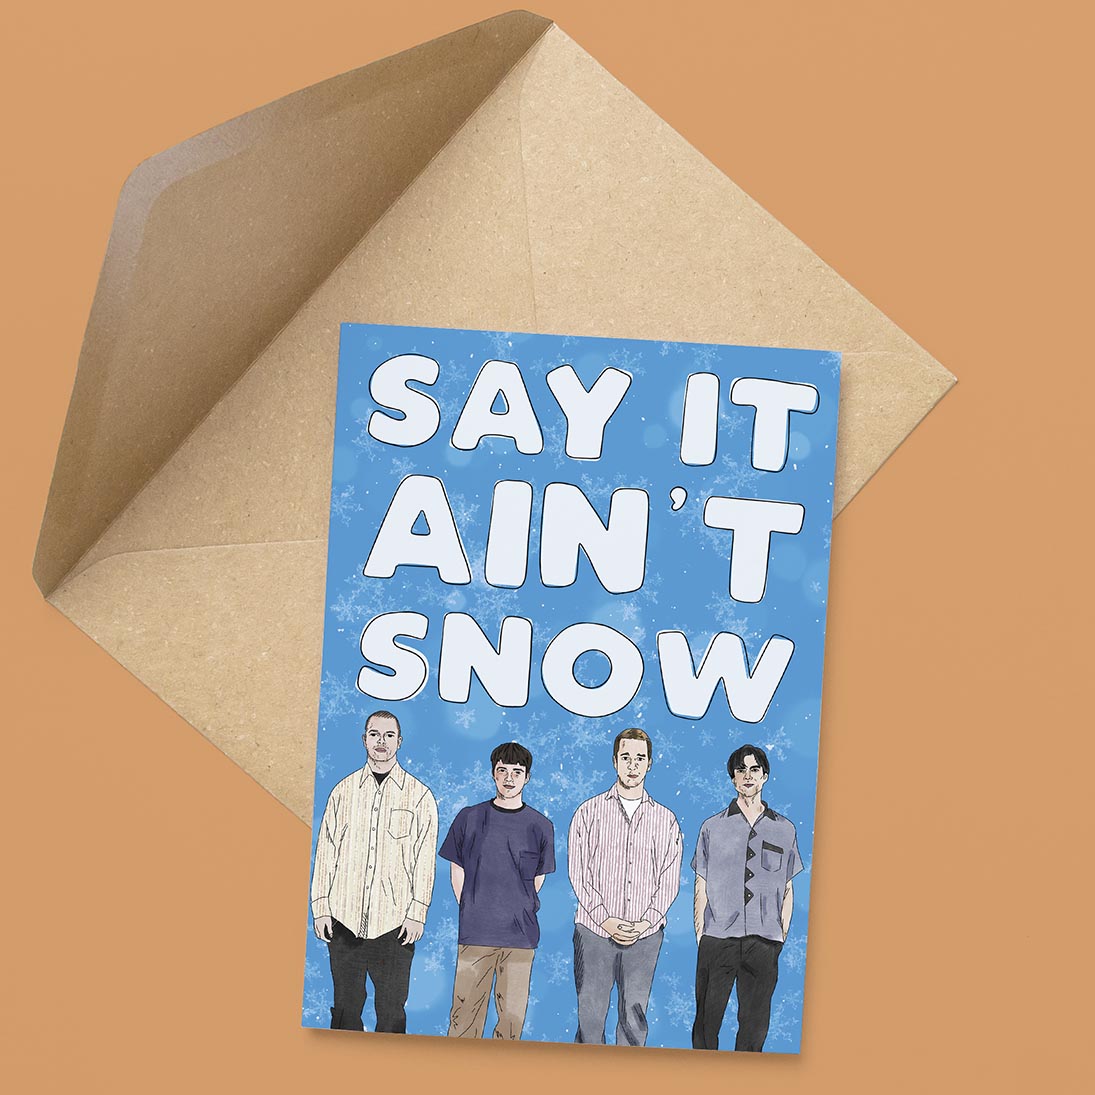 Say It Ain't Snow Card